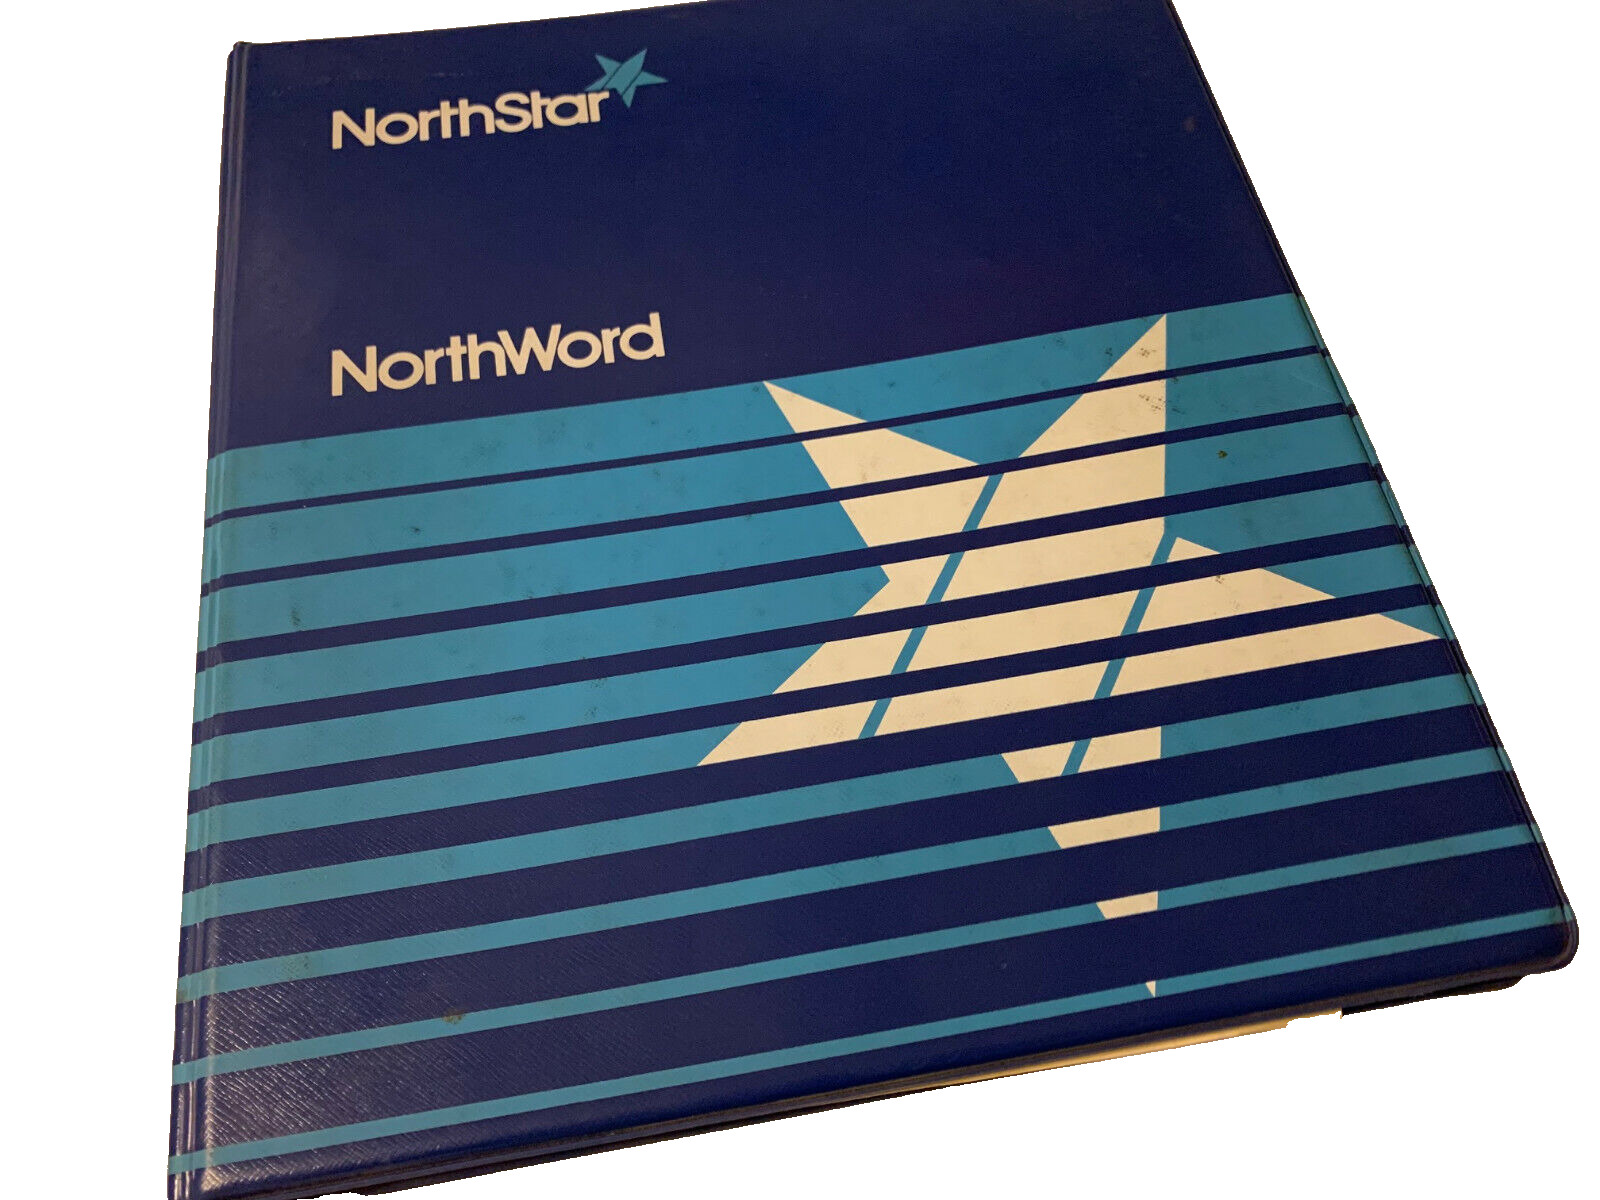 NorthStar NorthWord MANUAL NO DISKETTES VINTAGE LAST ONE COLLECTIBLE